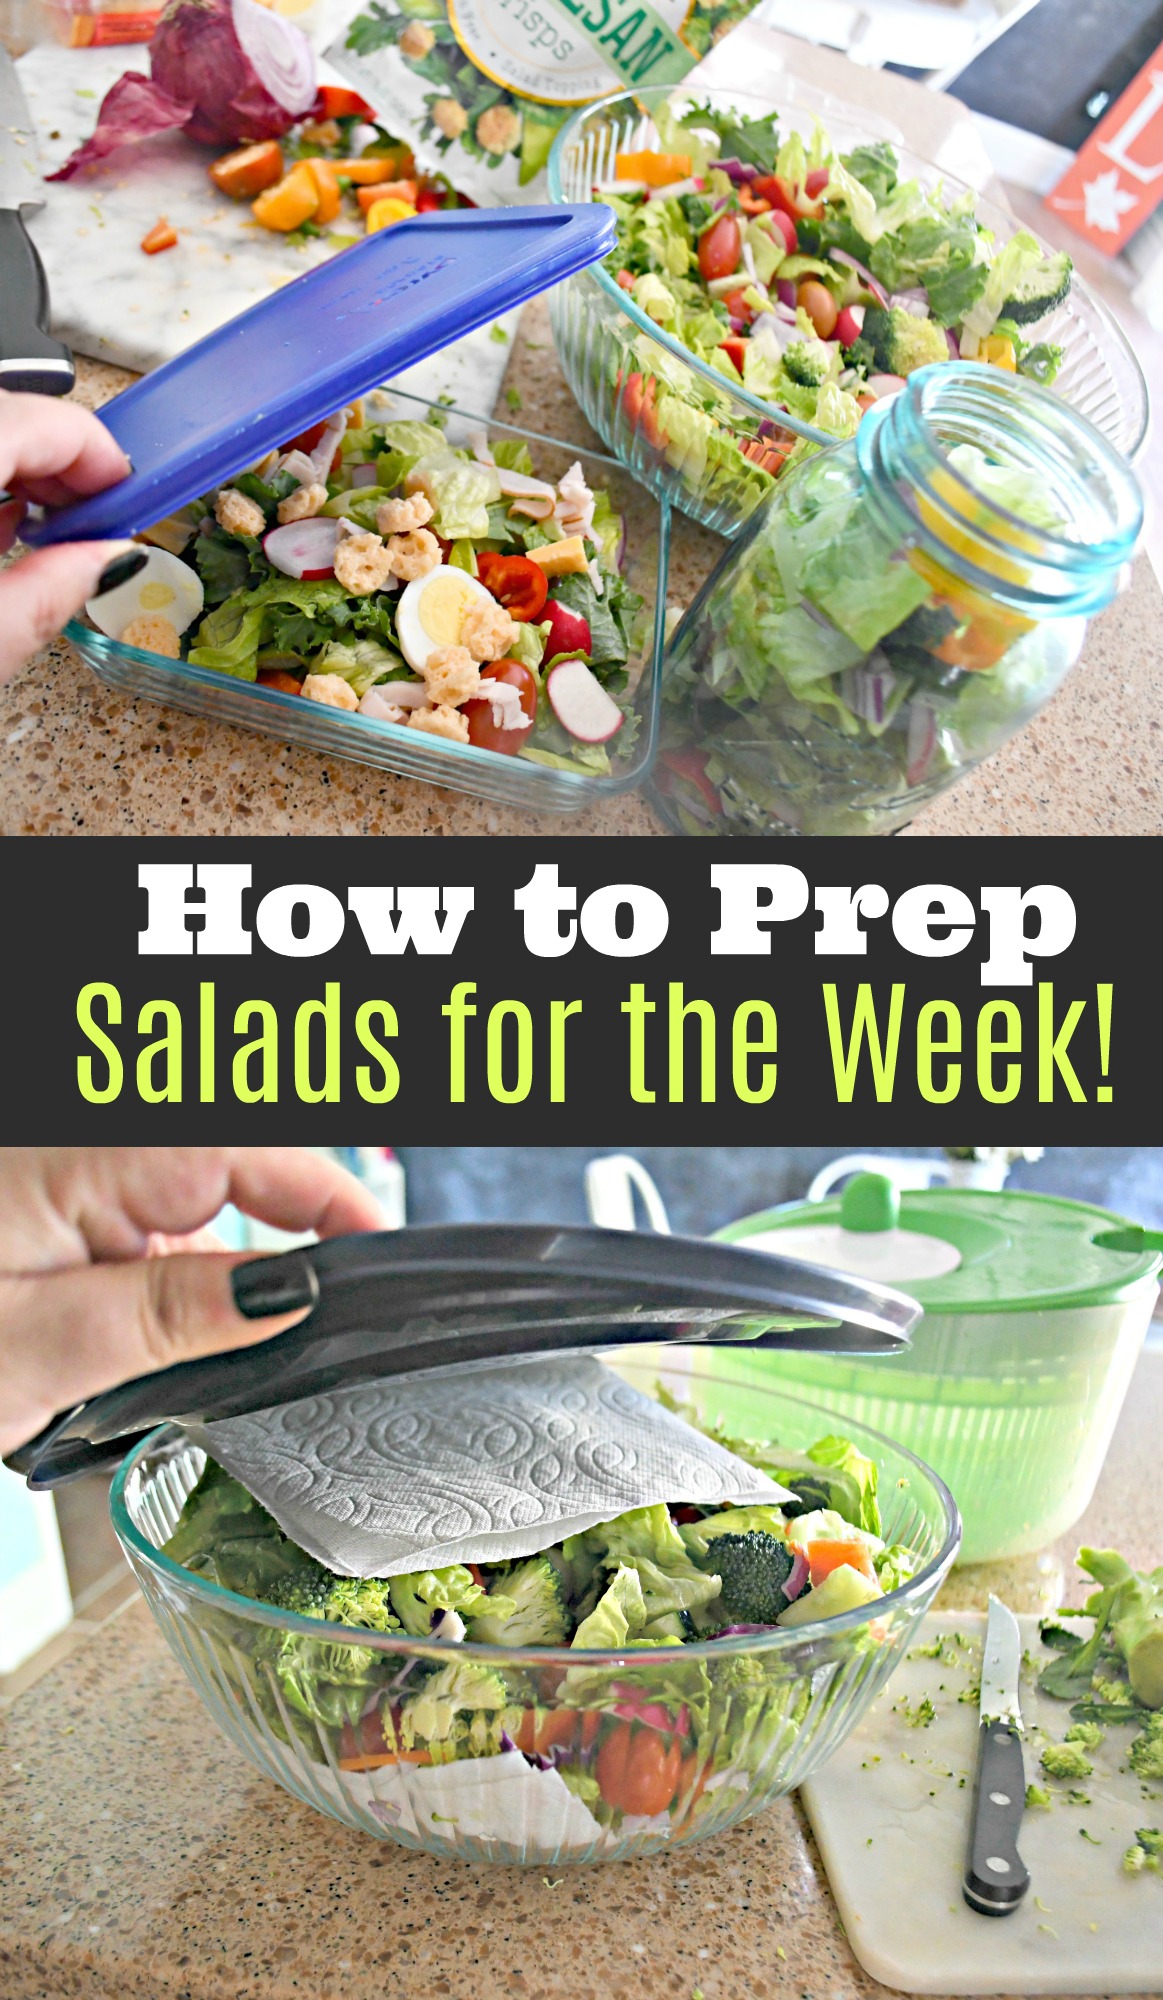 https://hip2save.com/wp-content/uploads/2018/09/prep-salads-for-the-week.jpg